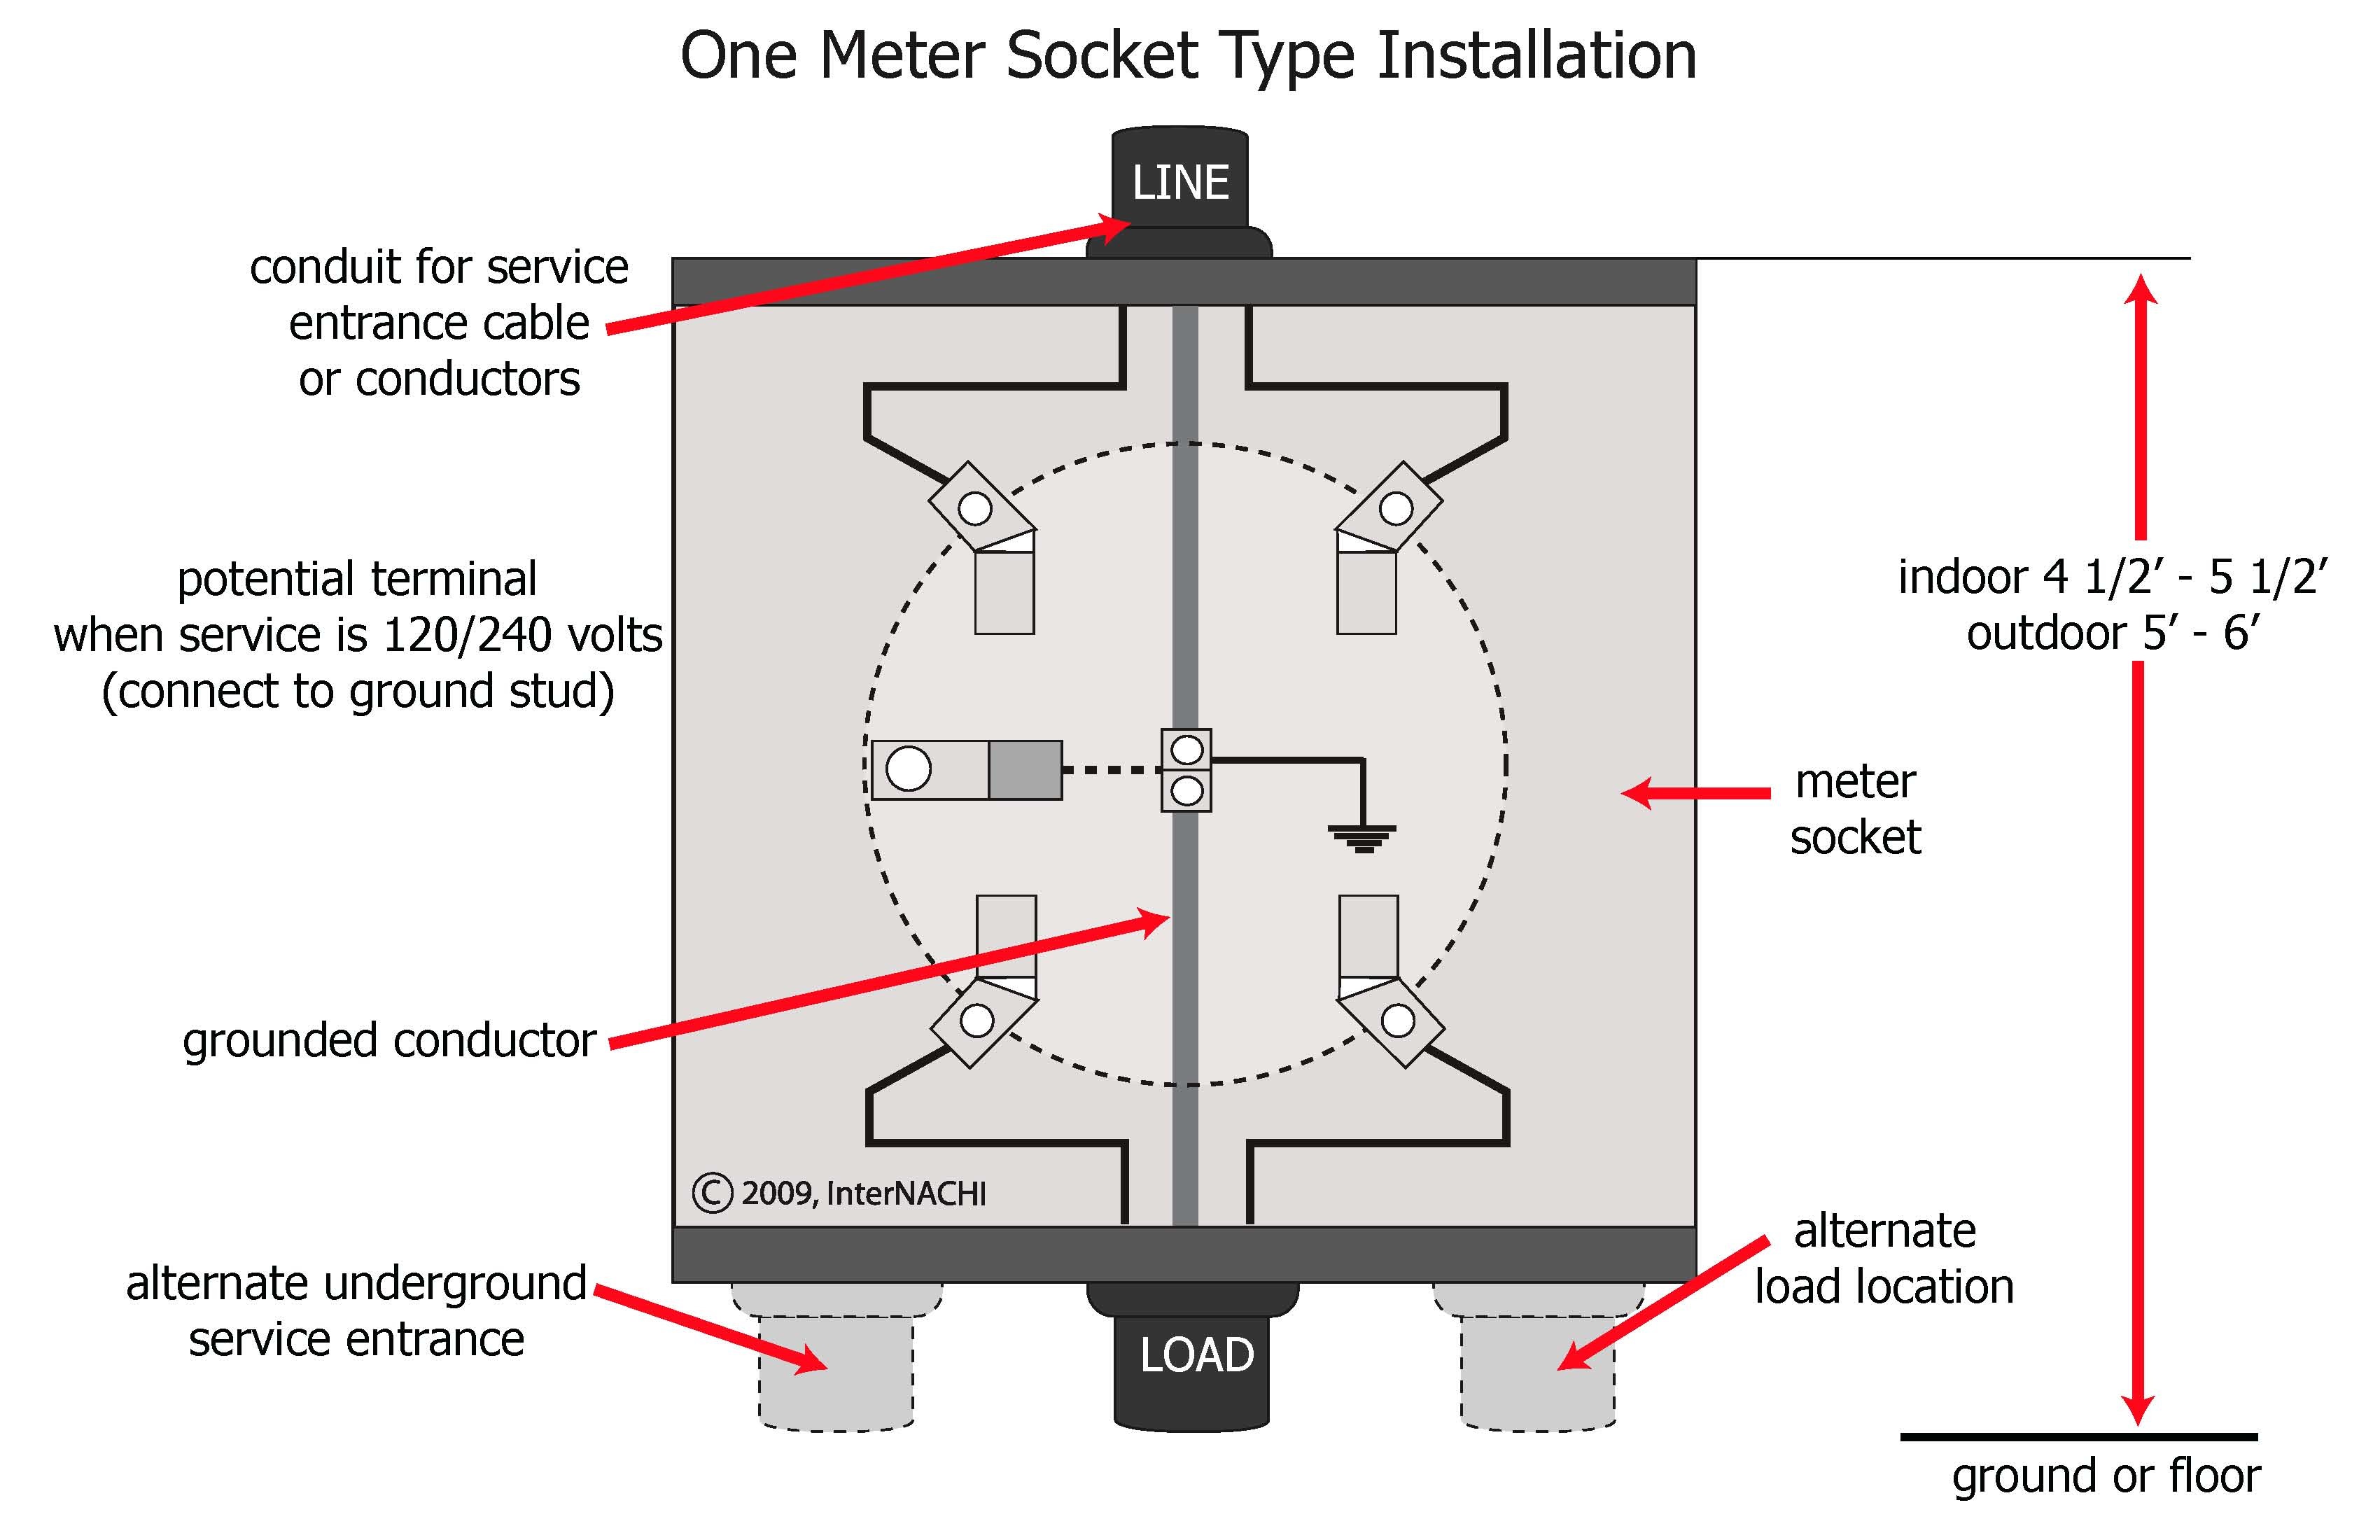 Milbank Meter Socket Wiring Diagram from d255gsaraiiffl.cloudfront.net